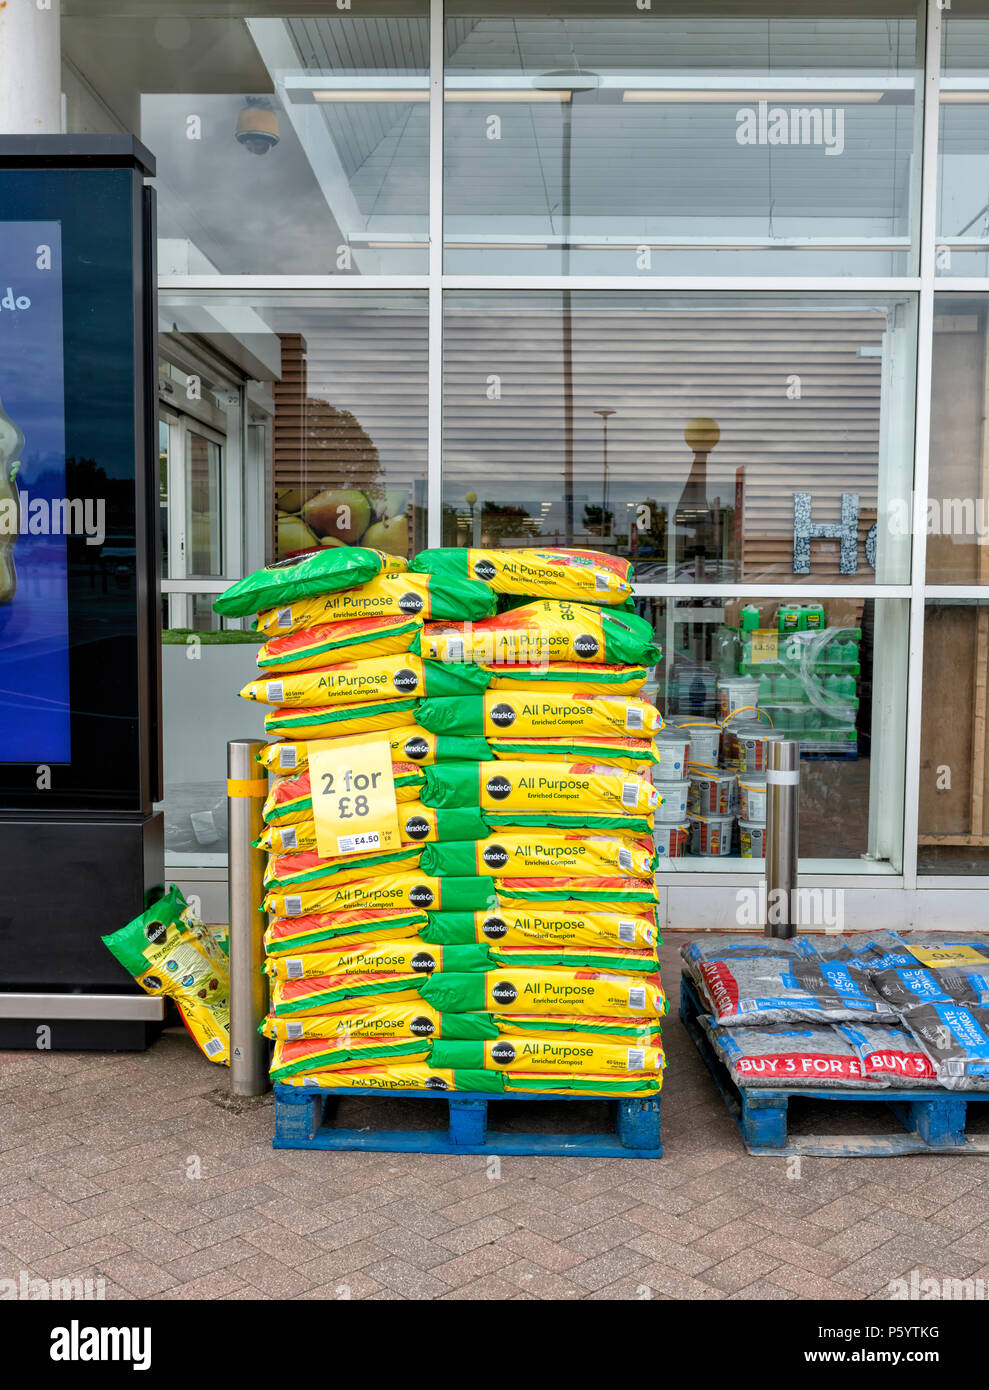 Palet lleno de bolsas con abono fuera de un supermercado Tesco Foto de stock